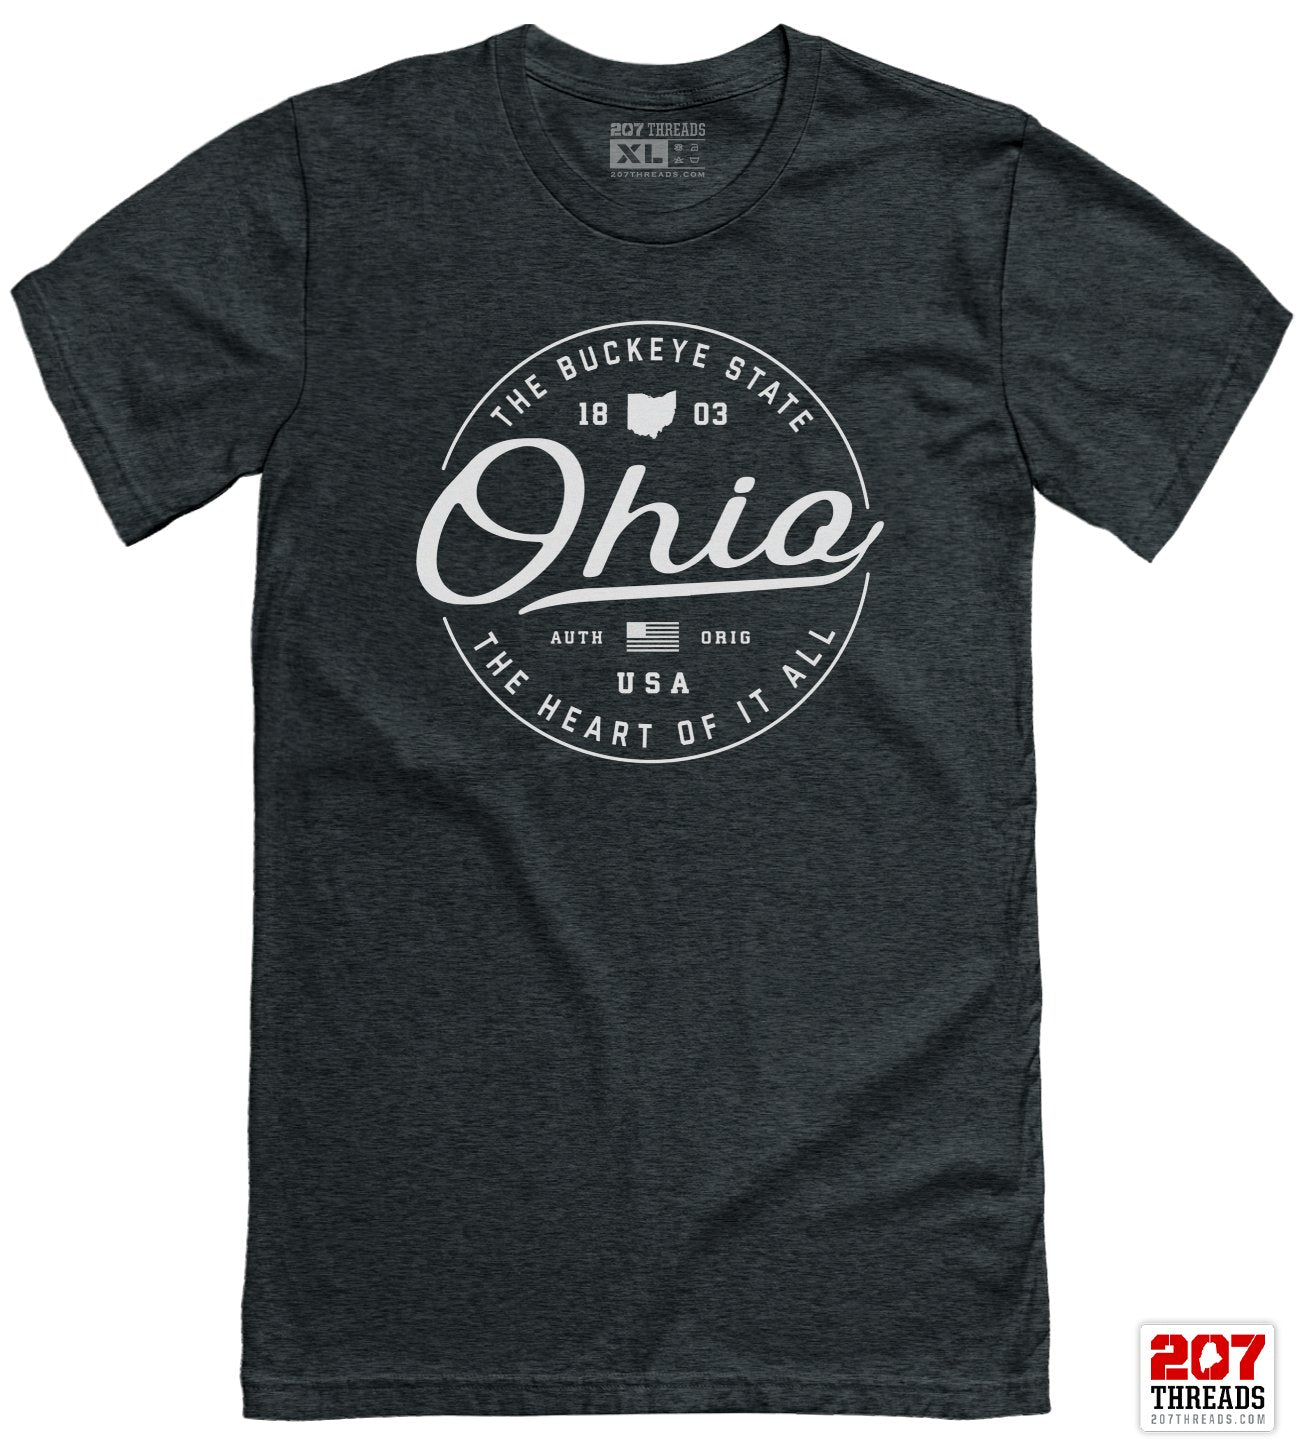 State of Ohio T-Shirt - Soft Ohio Vacation Tee